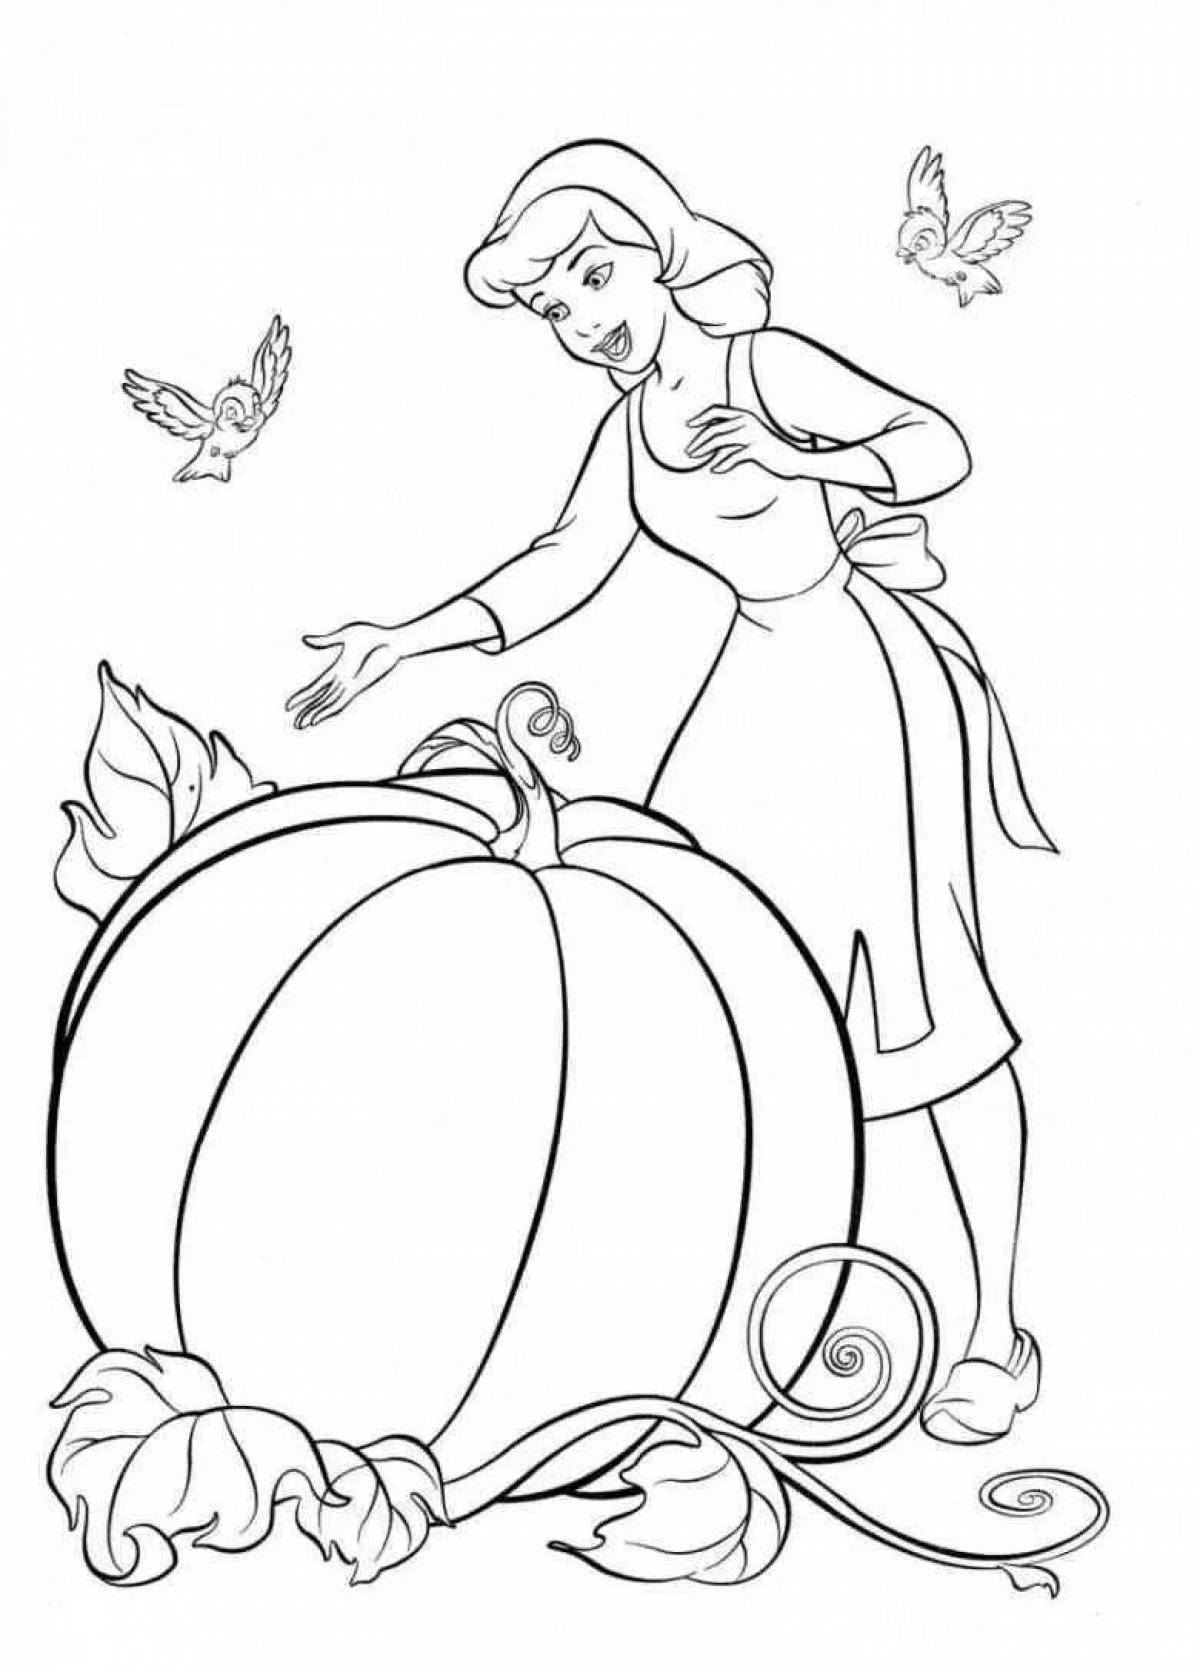 Bright Cinderella and Charles Perrault coloring book